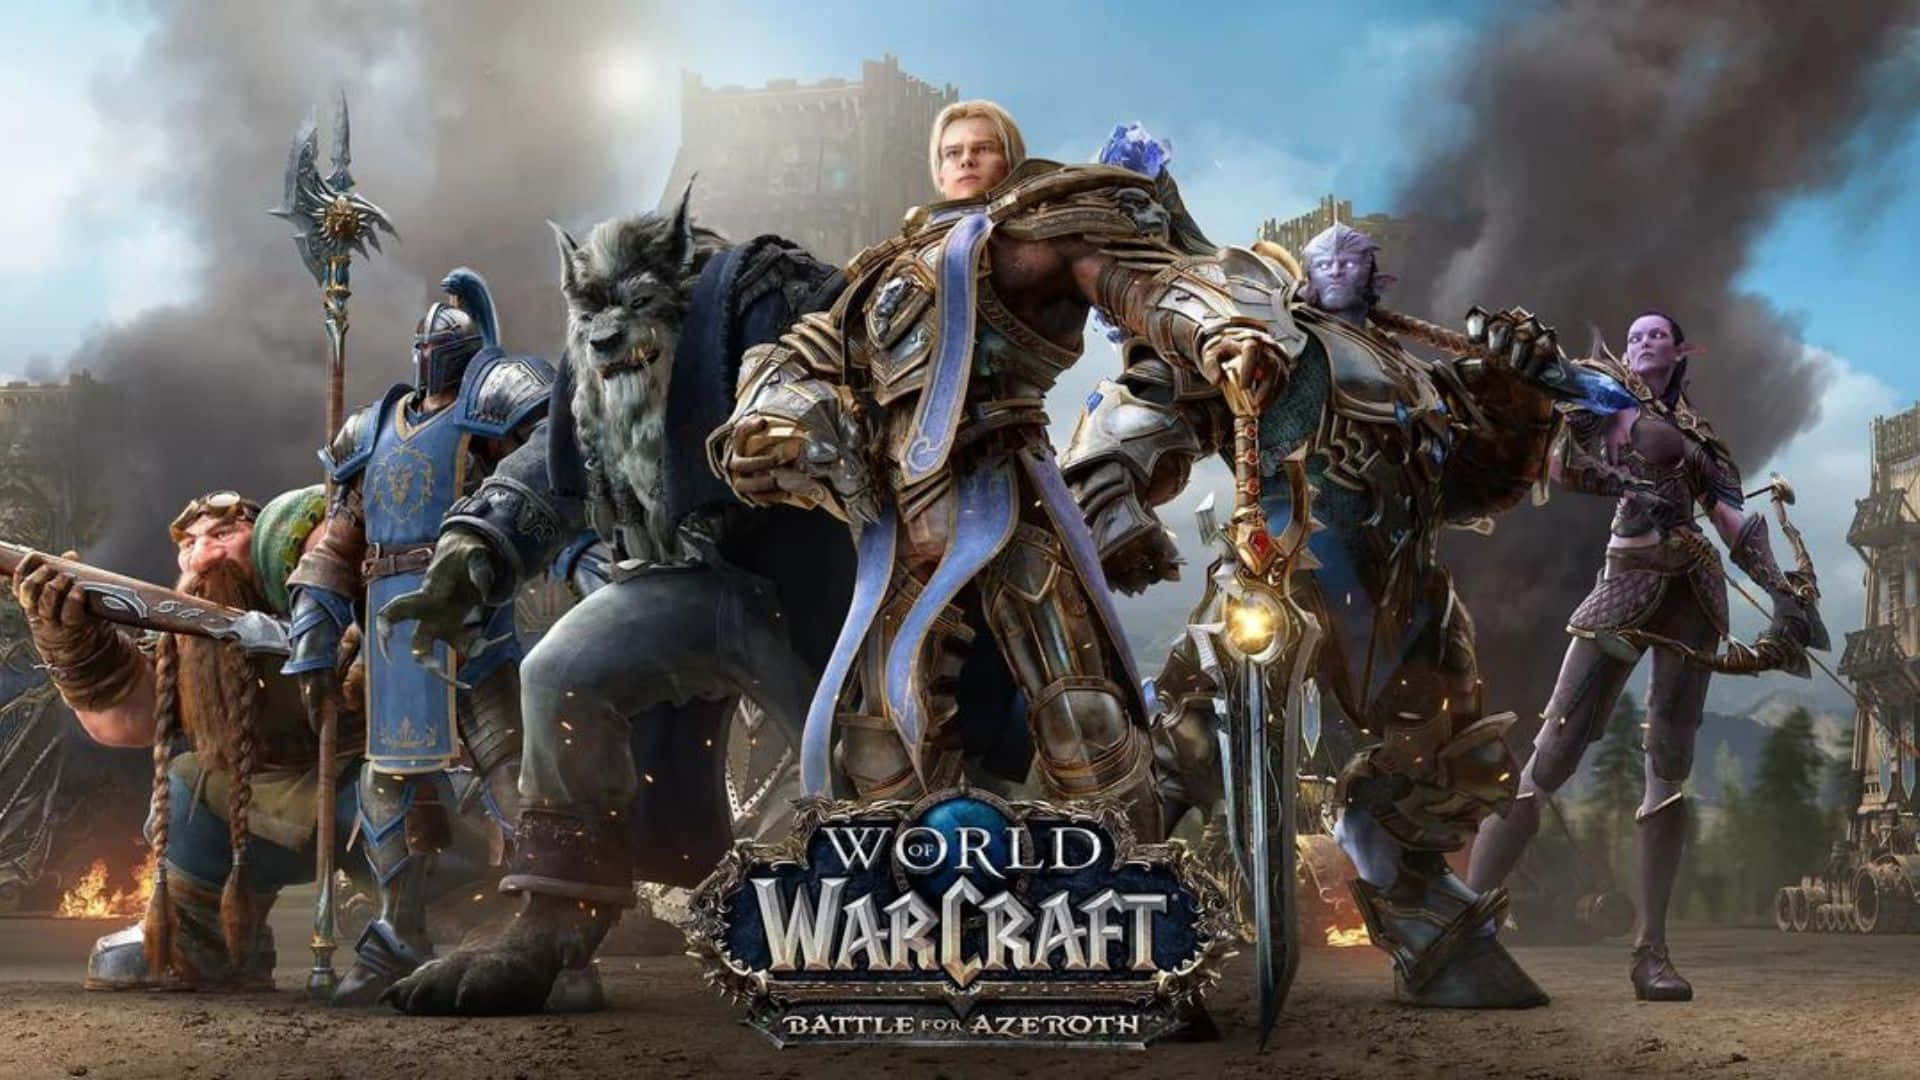 Epic World of Warcraft Races Battle Wallpaper